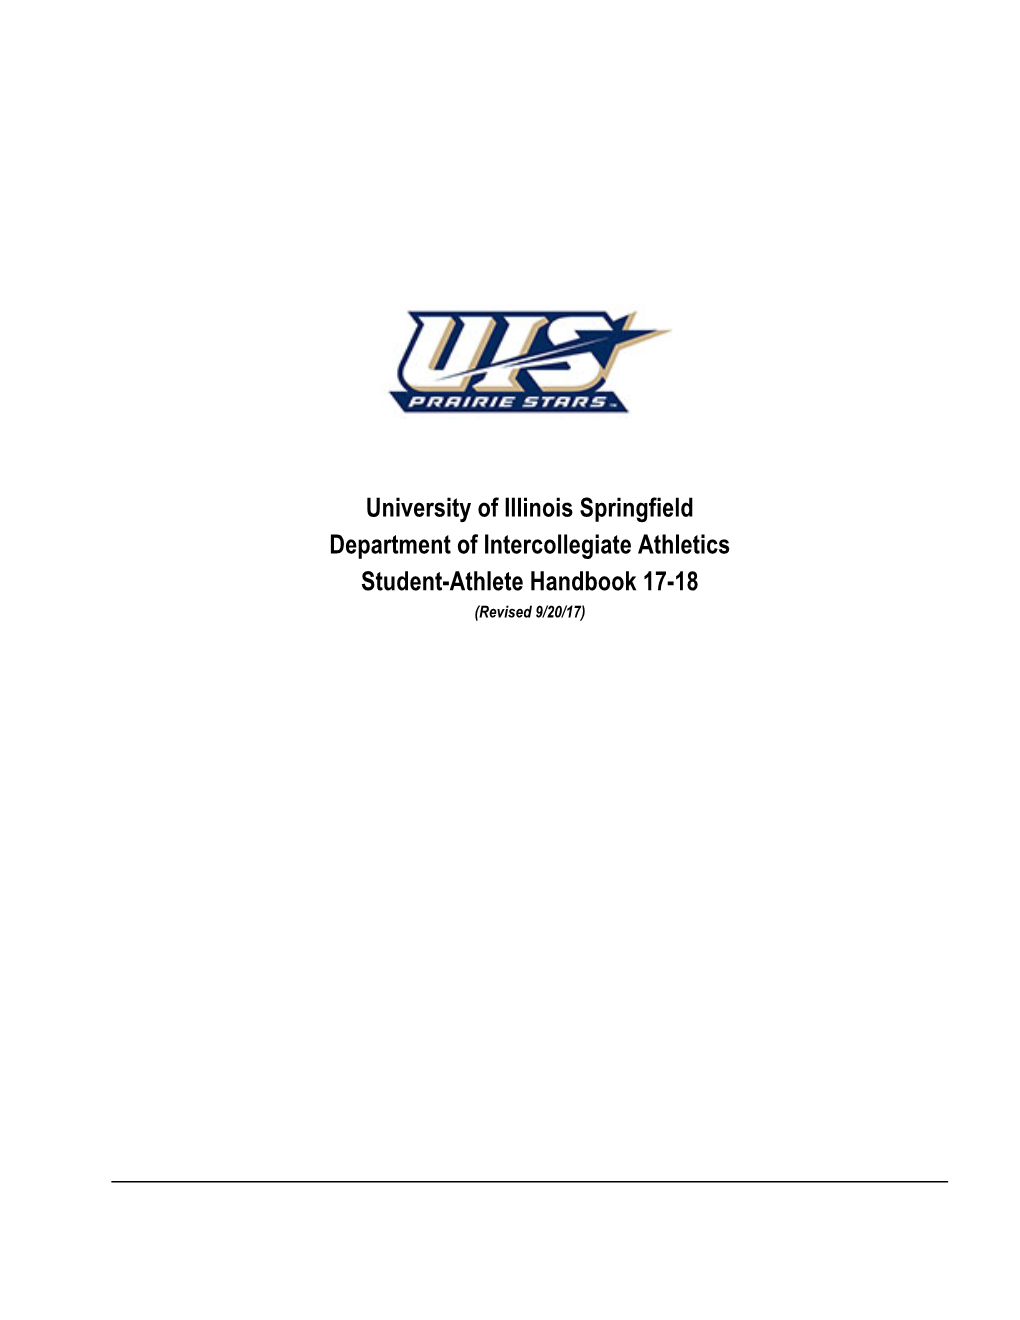 University of Illinois Springfield Department of Intercollegiate Athletics Student-Athlete Handbook 17-18 (Revised 9/20/17)